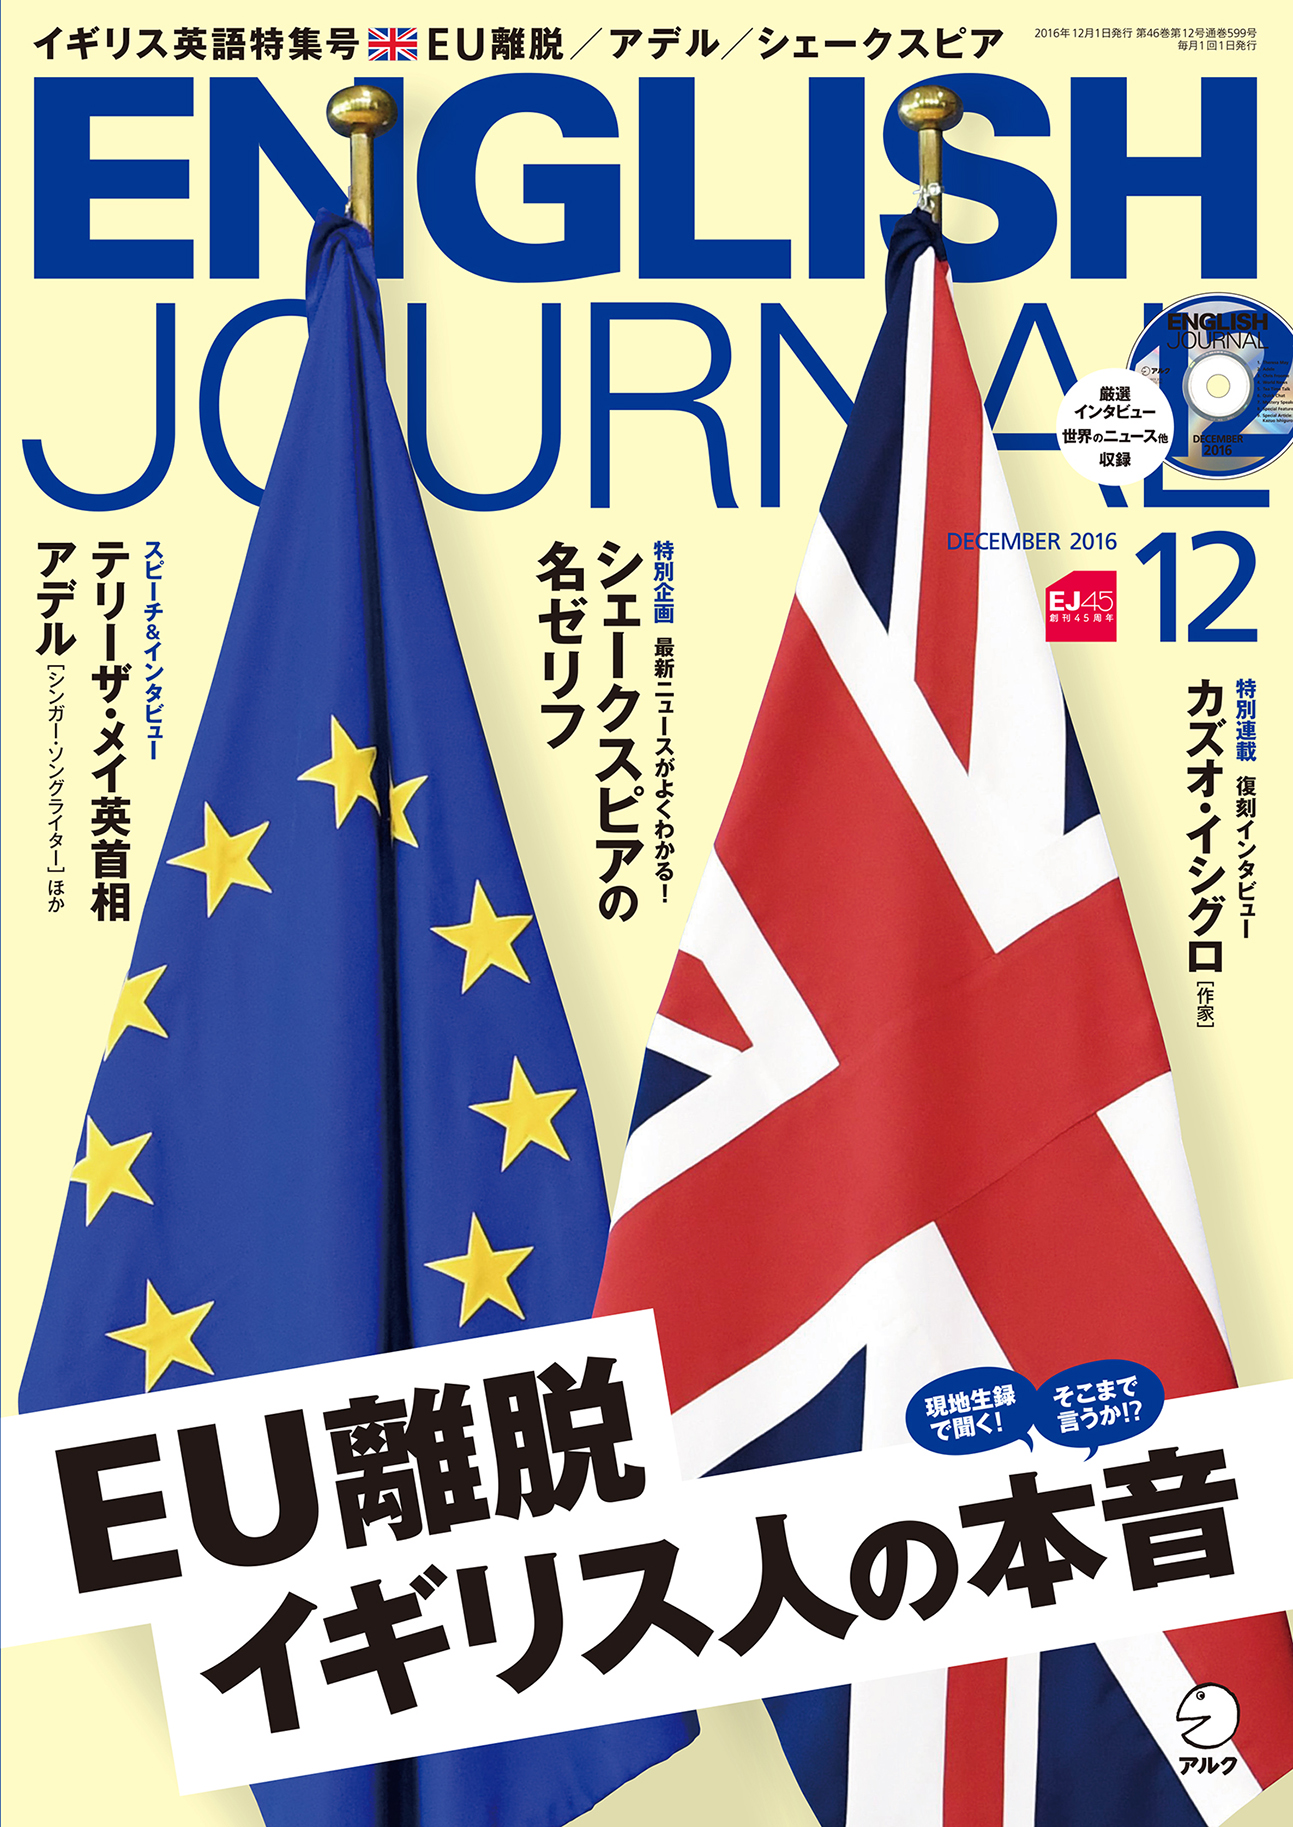 Eu離脱で話題のイギリスを大特集ーアデル シェークスピアも English Journal 16年12月号 11月5日発売 株式会社アルクのプレスリリース